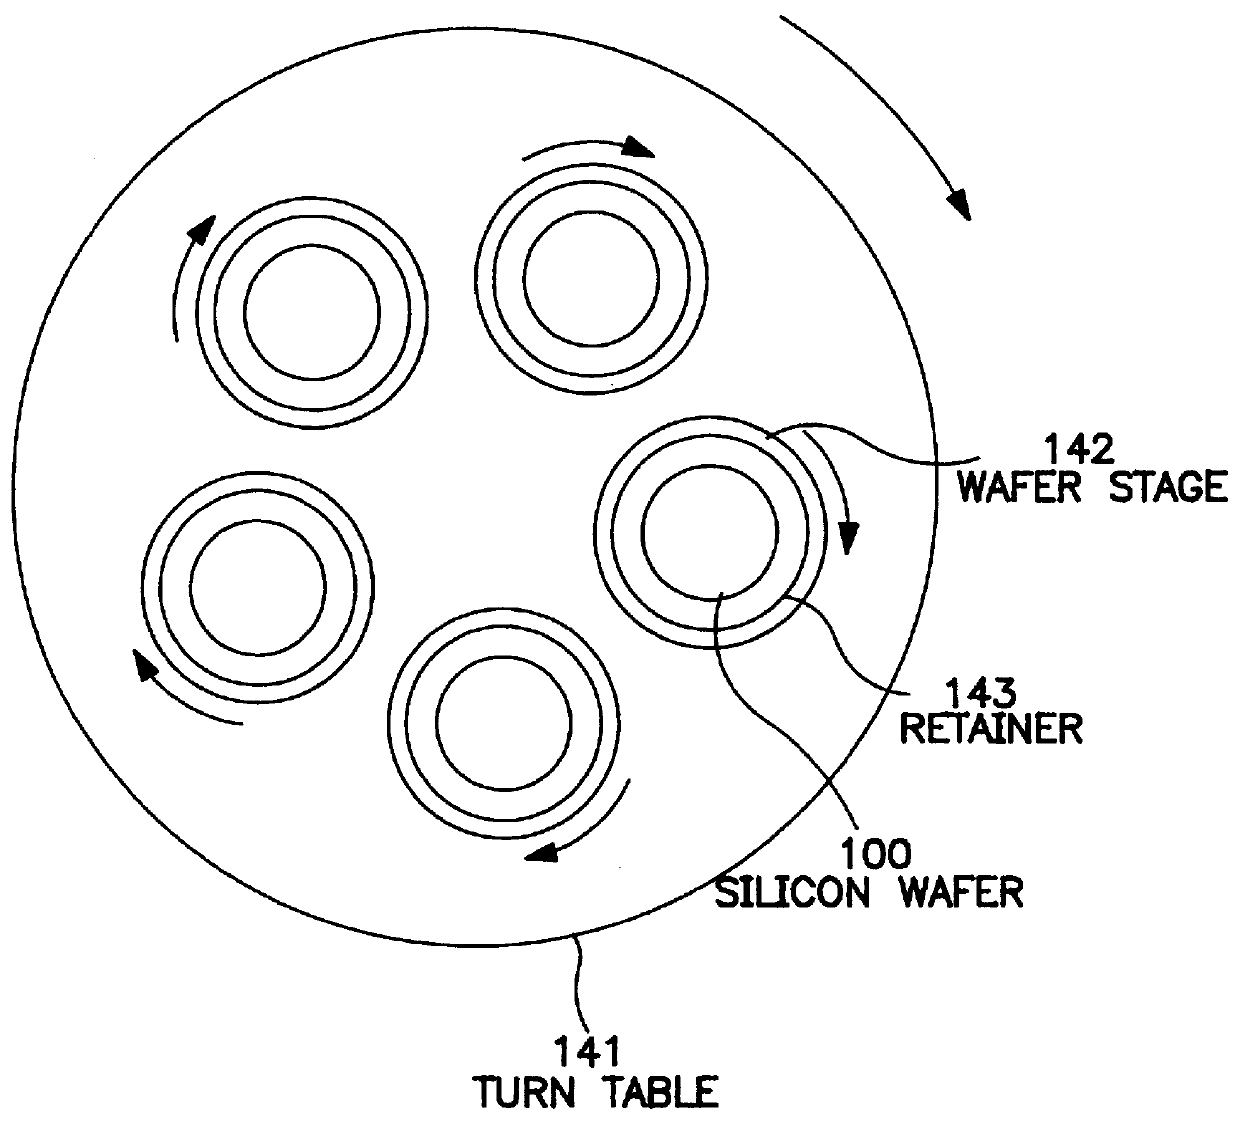 Polishing pad and apparatus for polishing a semiconductor wafer